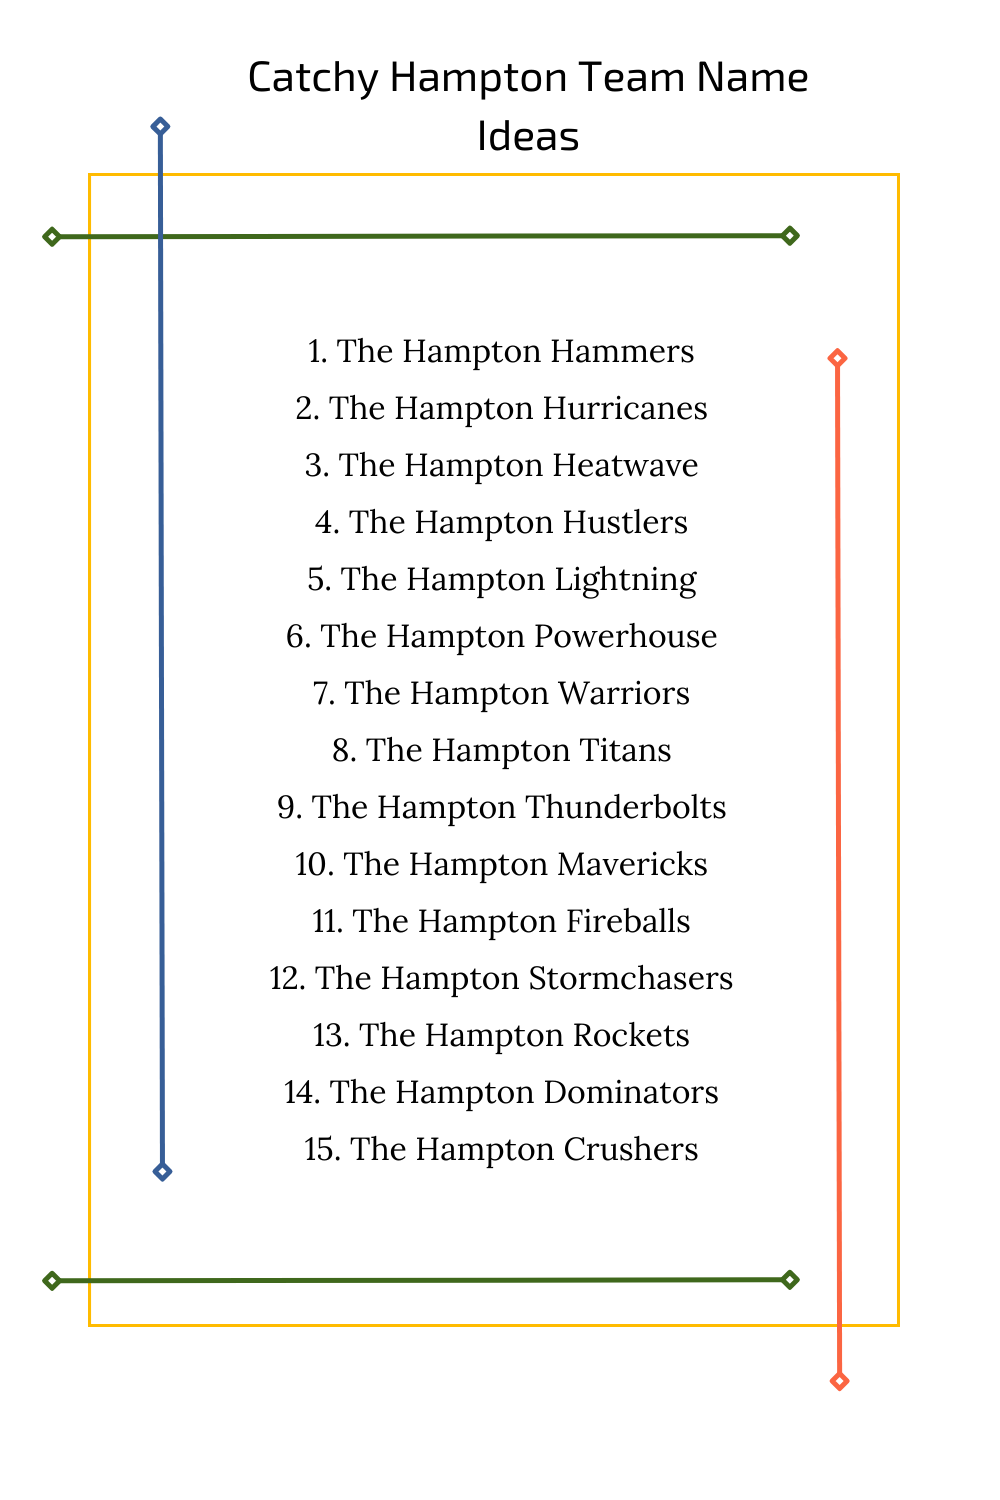 Catchy Hampton Team Name Ideas